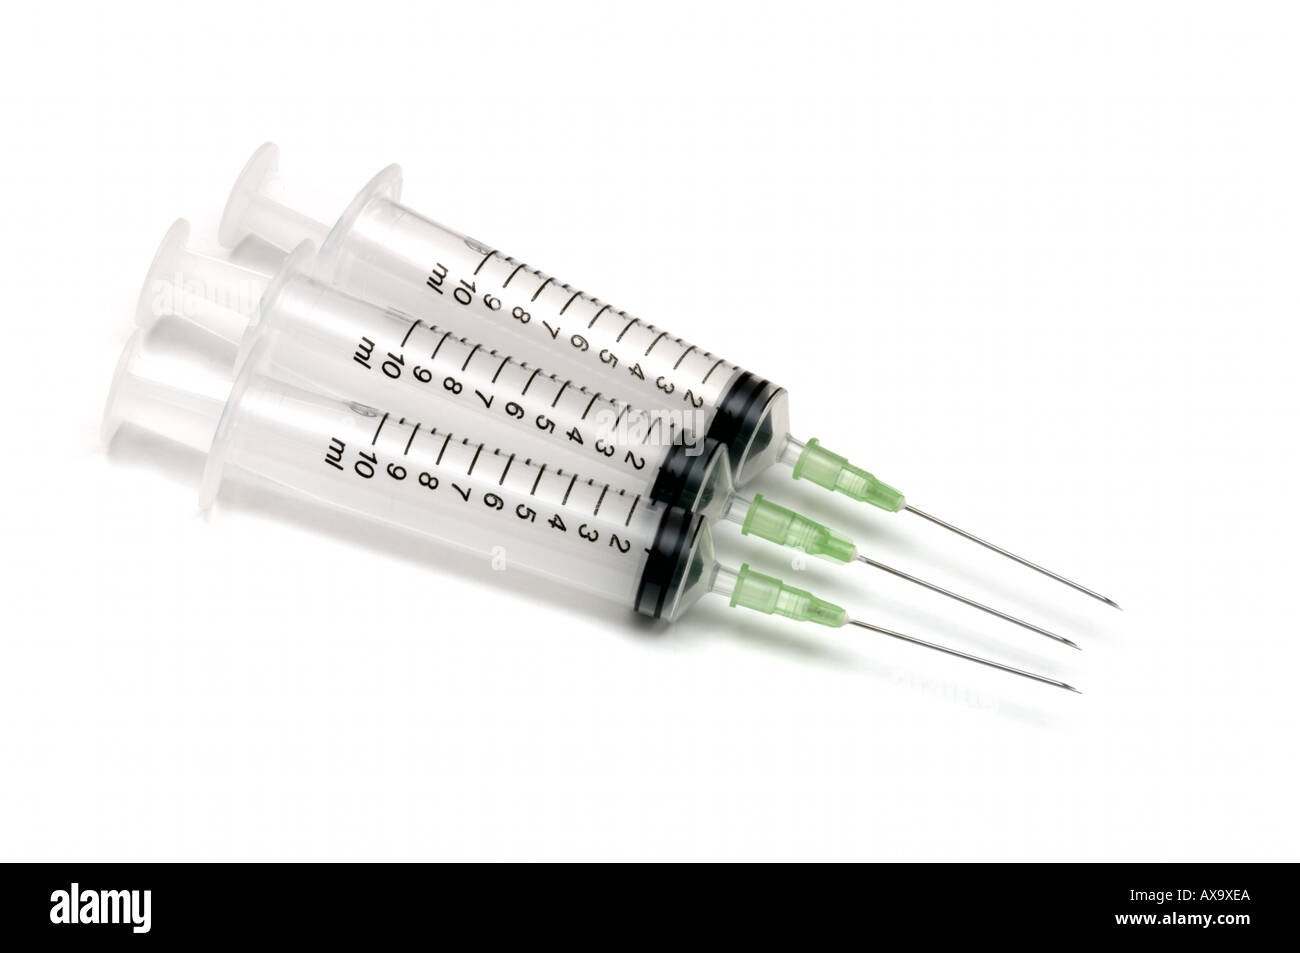 3 three 10ml Plastic disposable injection syringe with needle on white background Stock Photo